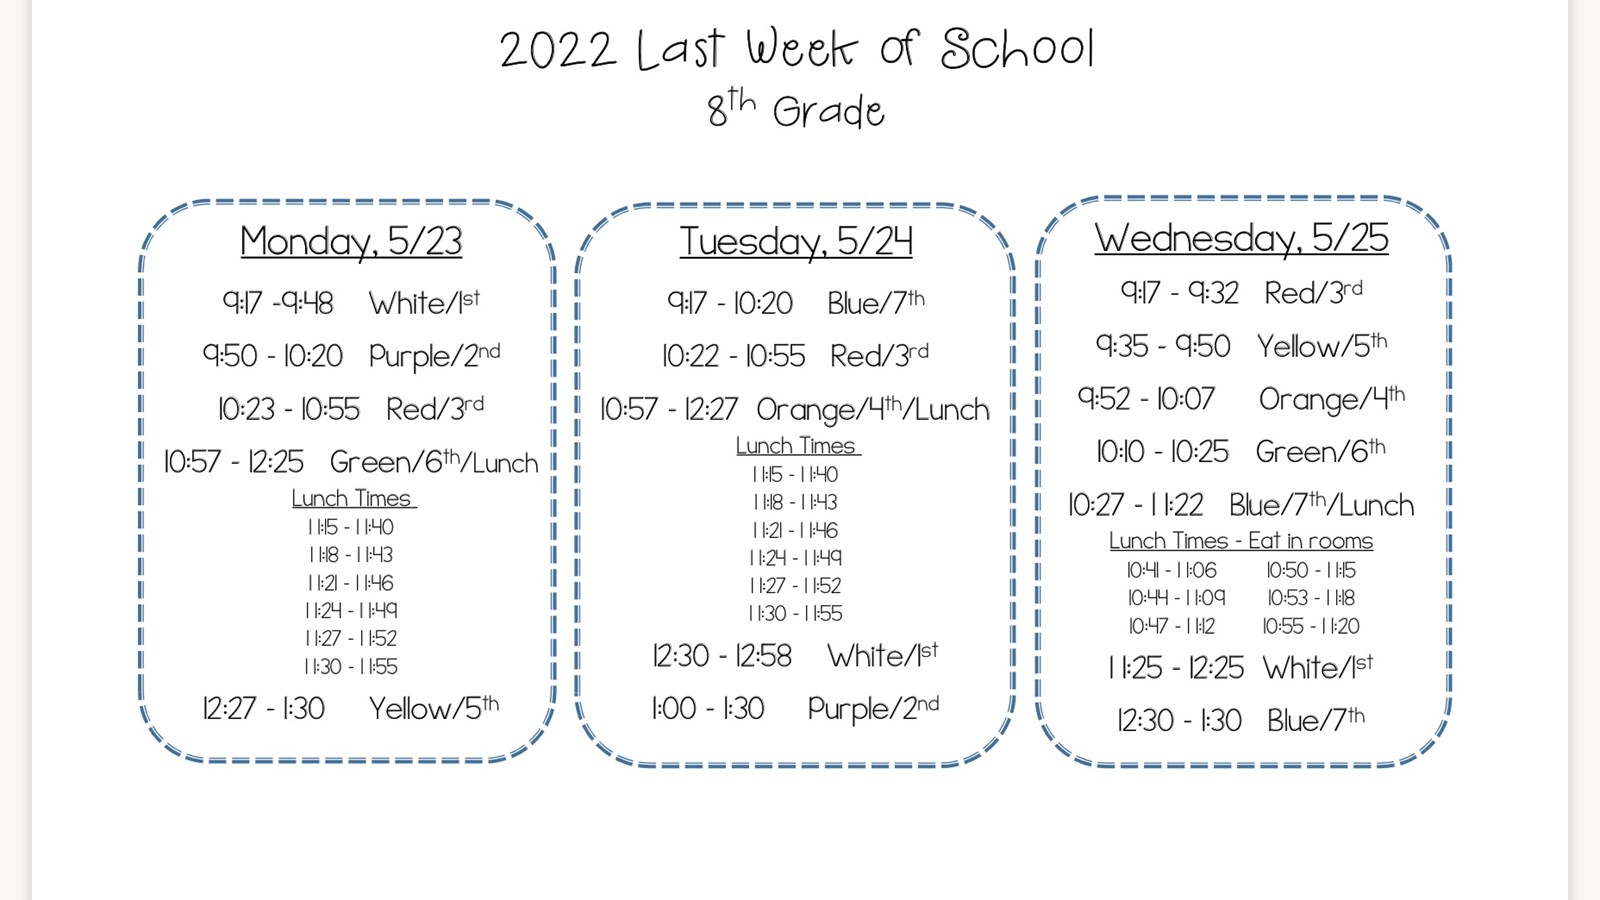 Last Week of School Schedule May 23 - 25 (text below)